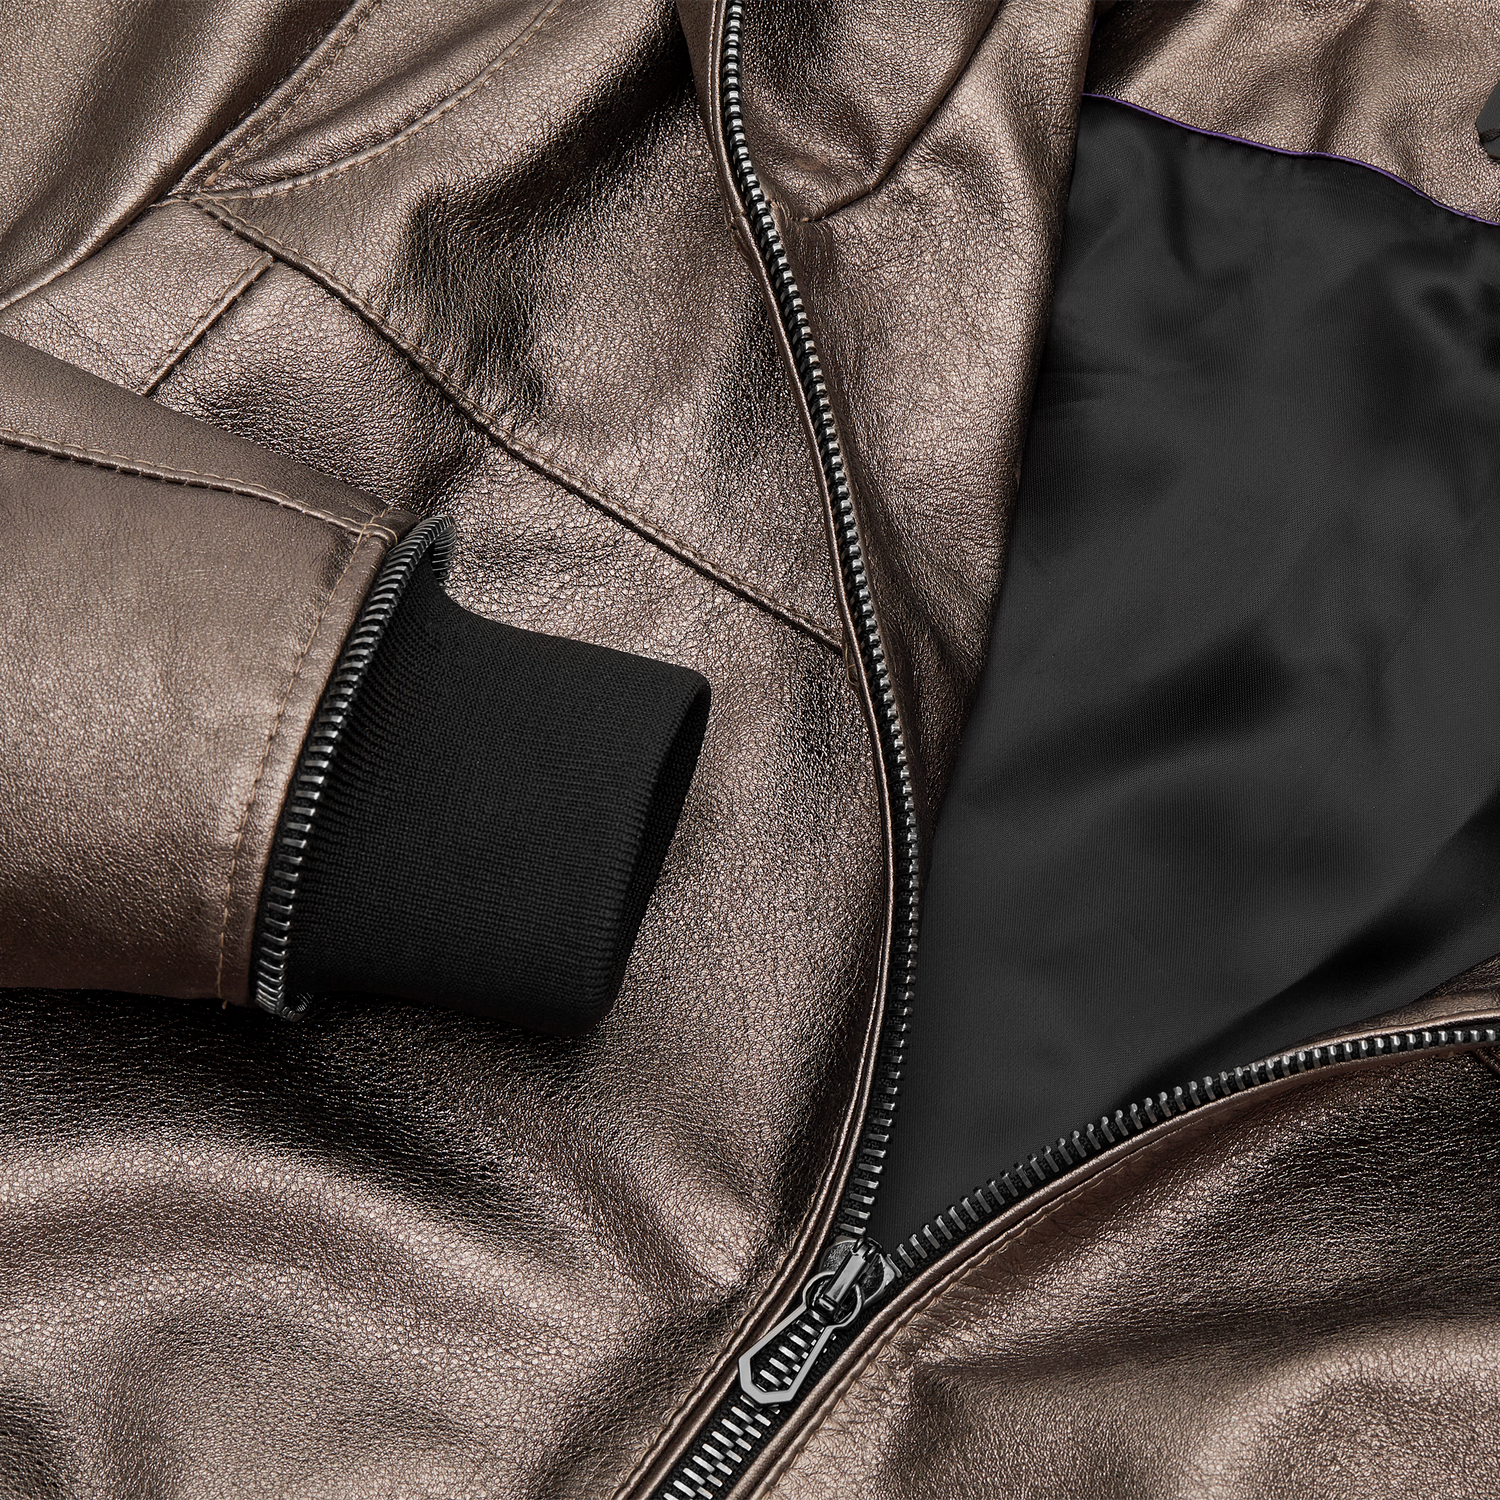 Berlin Leather Jacket by Martin Key